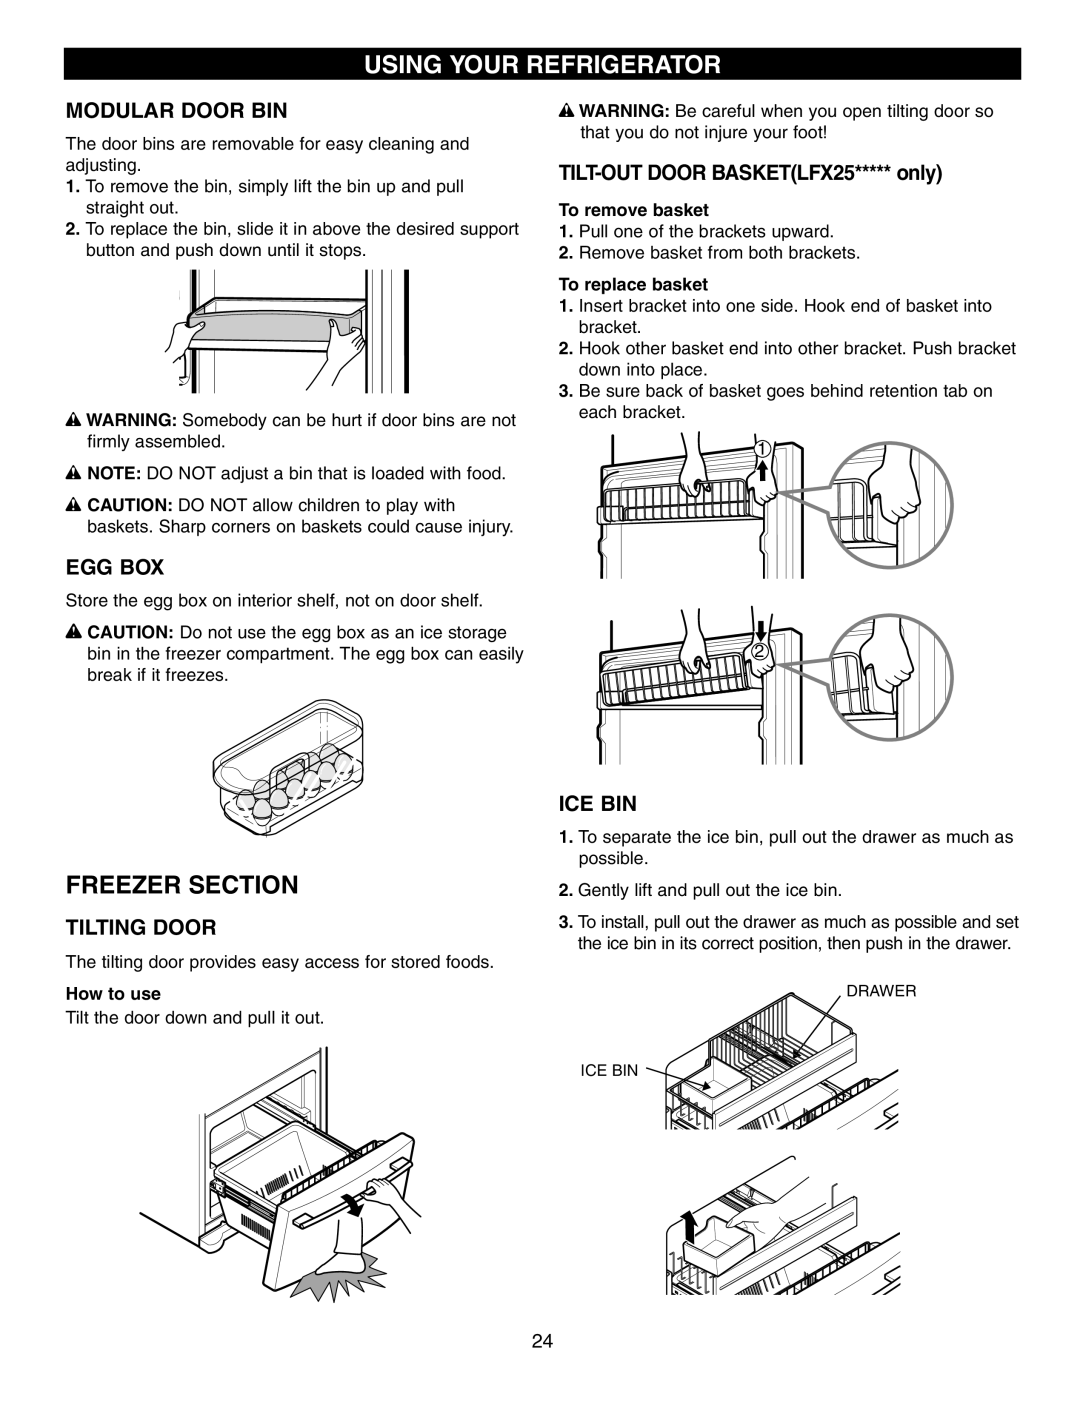 LG Electronics LFX25960 manual Freezer Section, Using Your Refrigerator, Modular Door Bin, Egg Box, Tilting Door, Ice Bin 